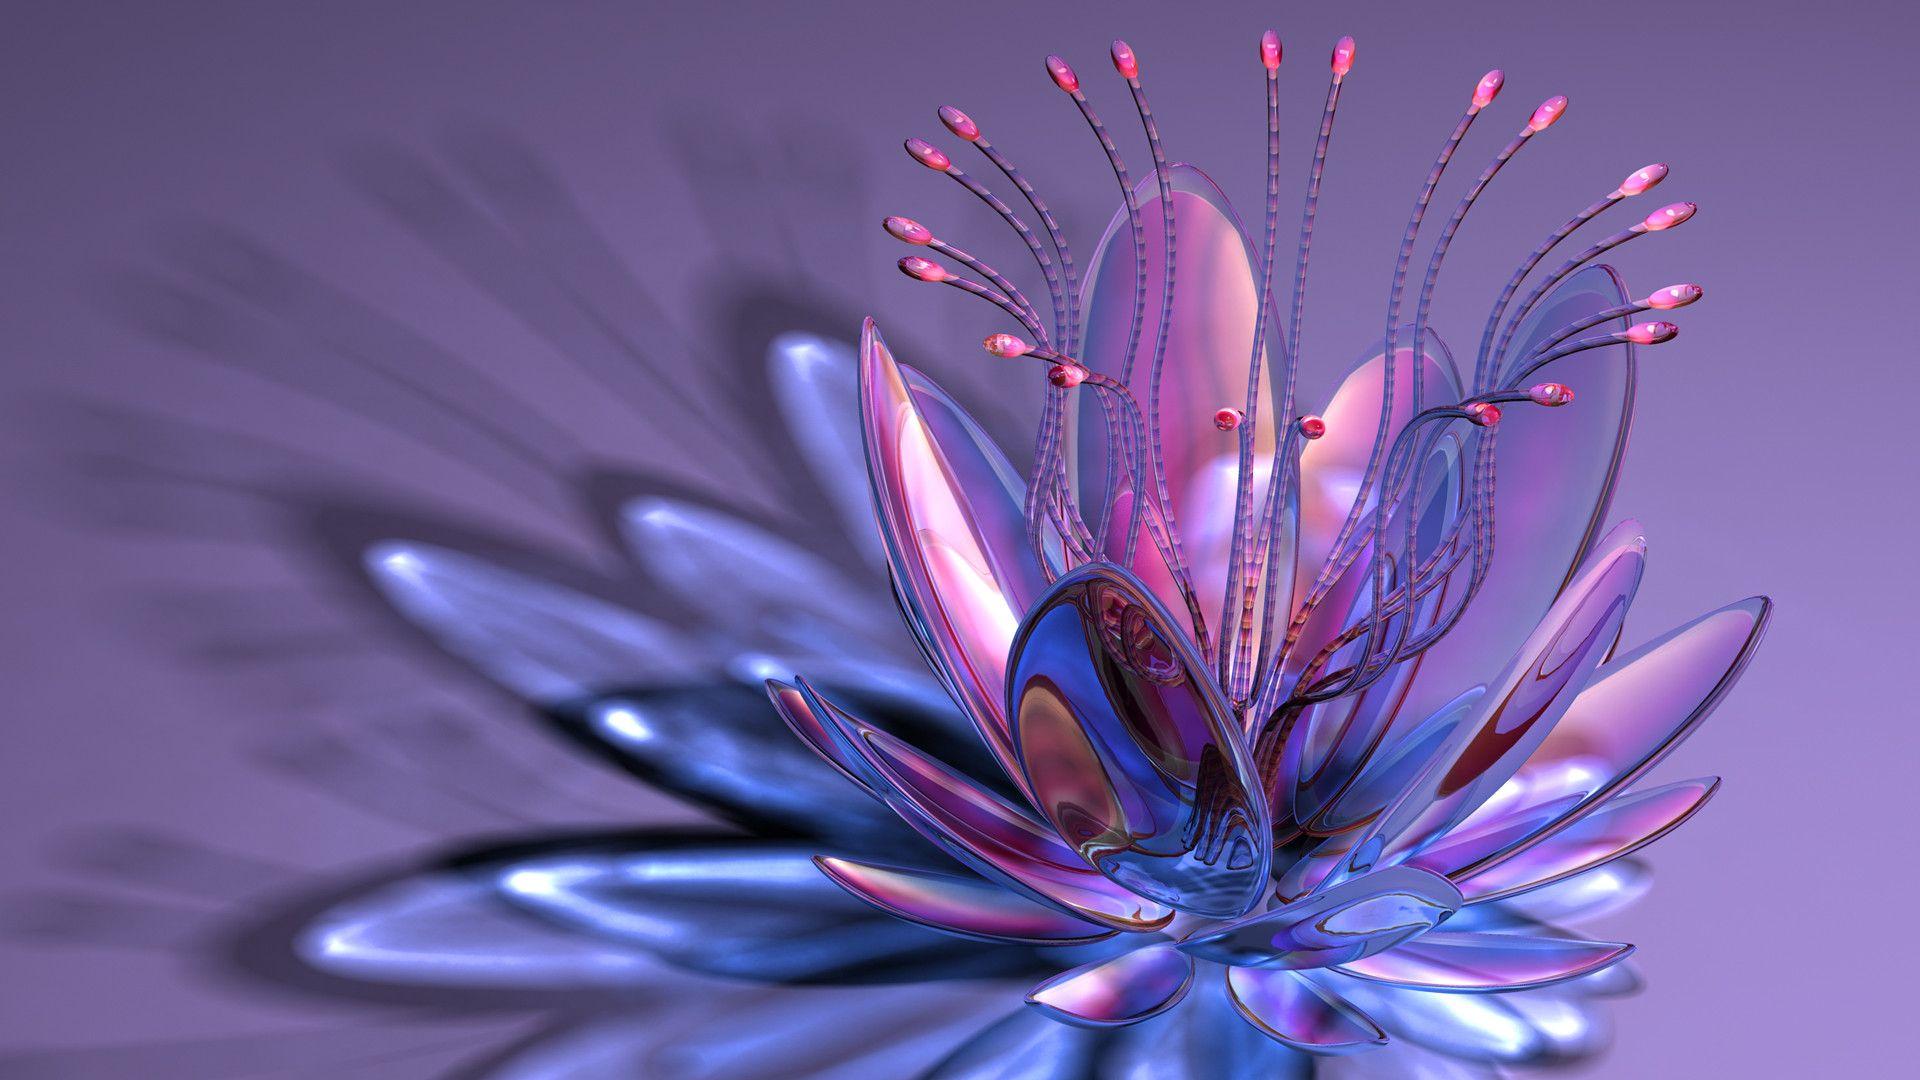 Aquarius Glass Flower Hd Wallpaper 3d For Desktop Mobile Phones And Laptop  1920x1080 : 